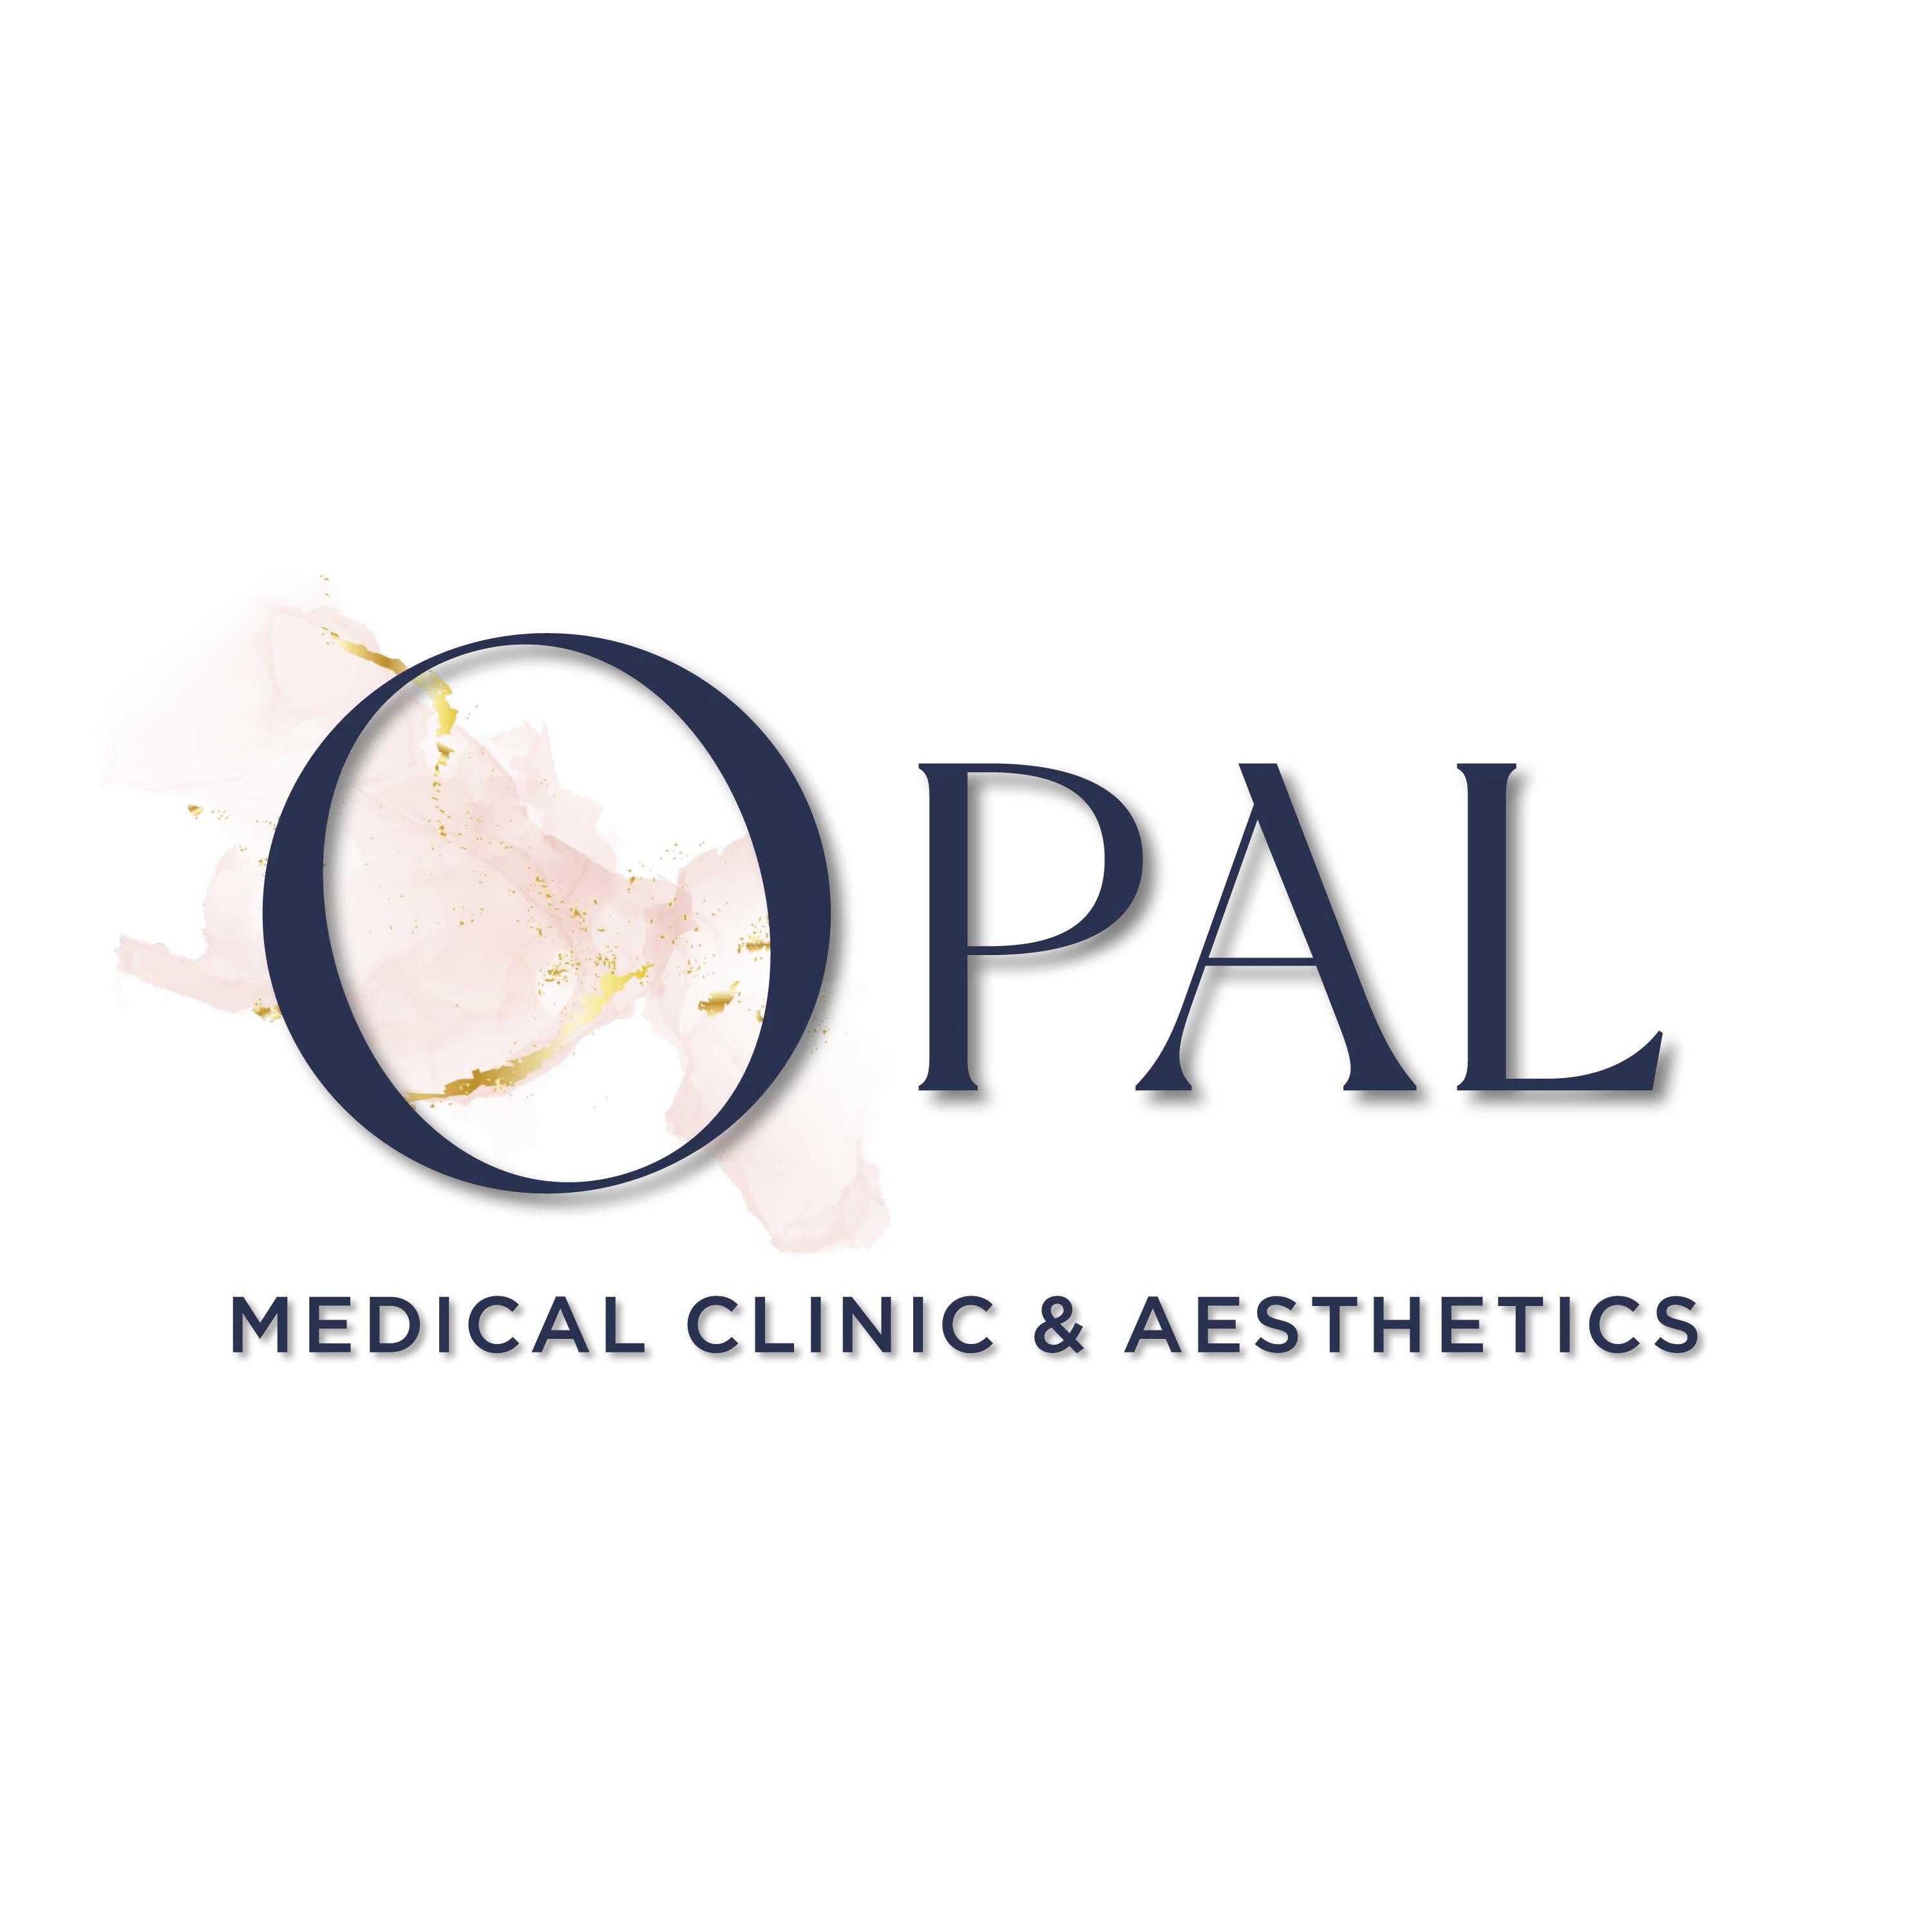 Opal Medical Clinic & Aesthetics